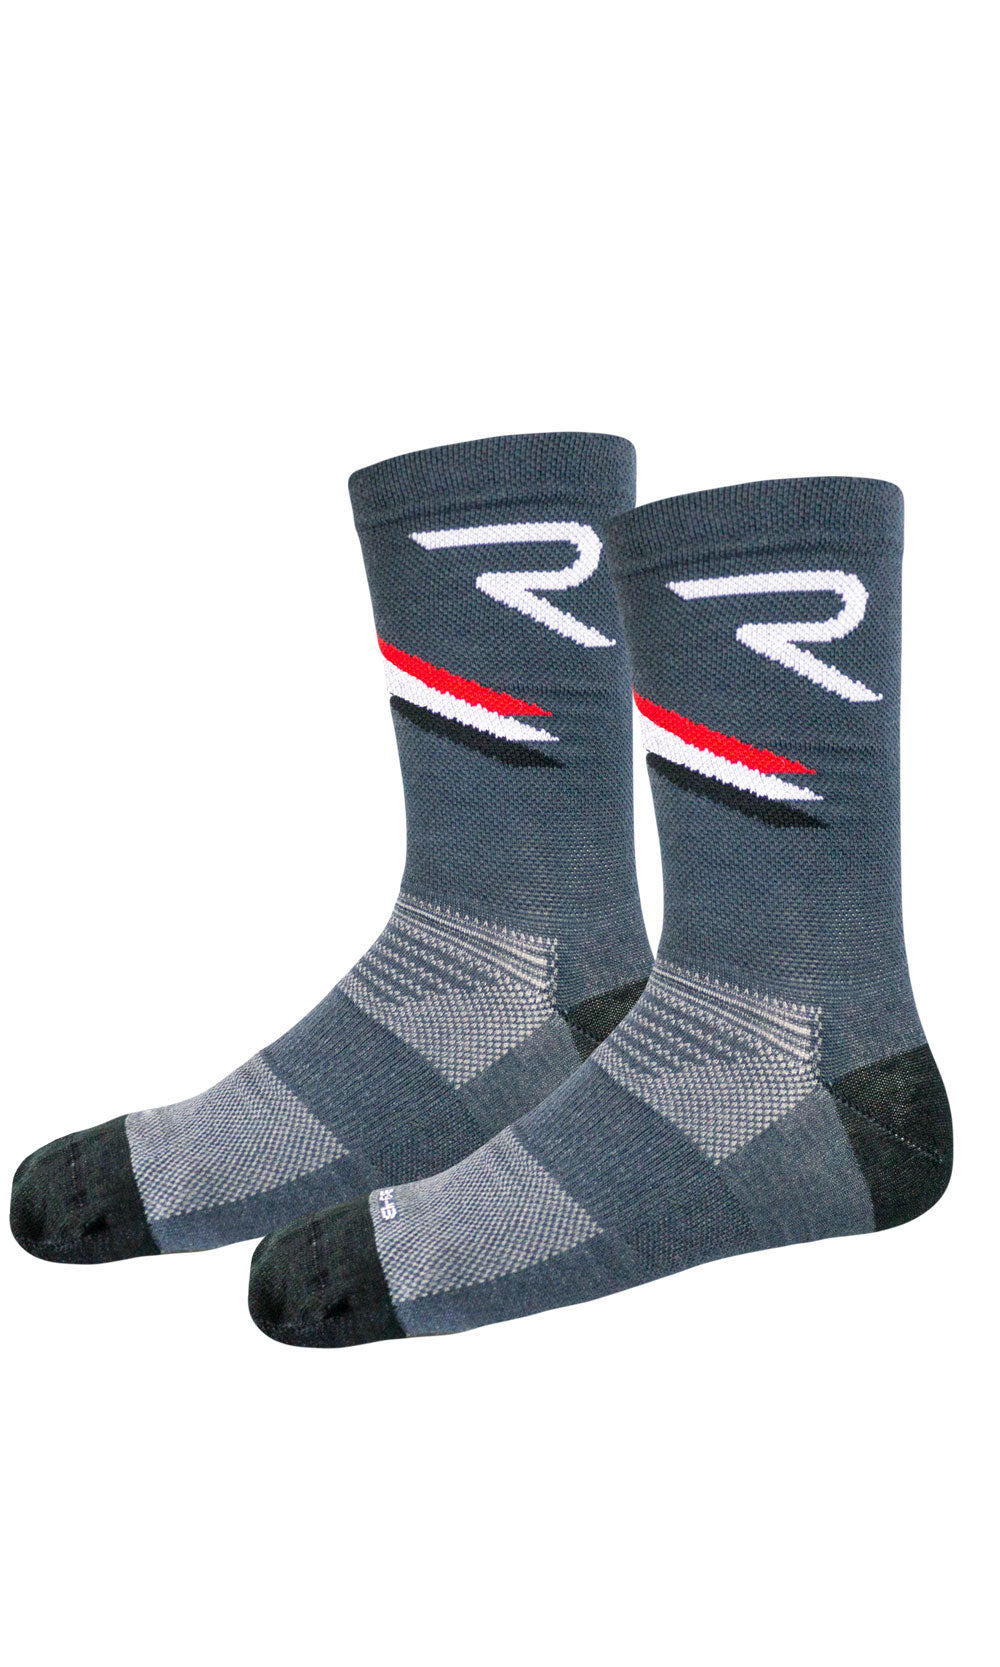 R-DRY socks